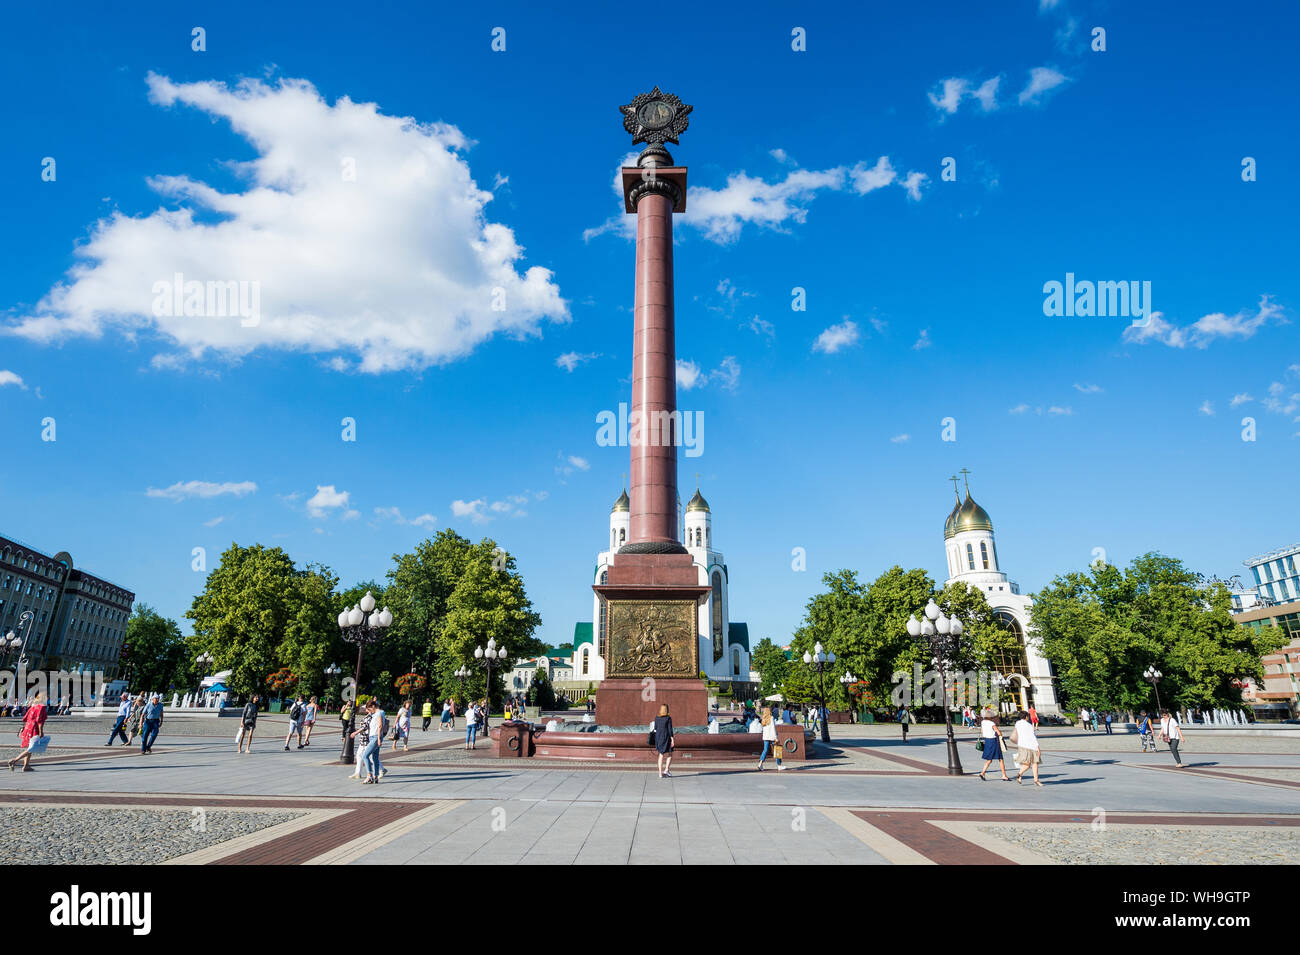 Triumphal column, Pobedy Square, Kaliningrad, Russia, Europe Stock Photo